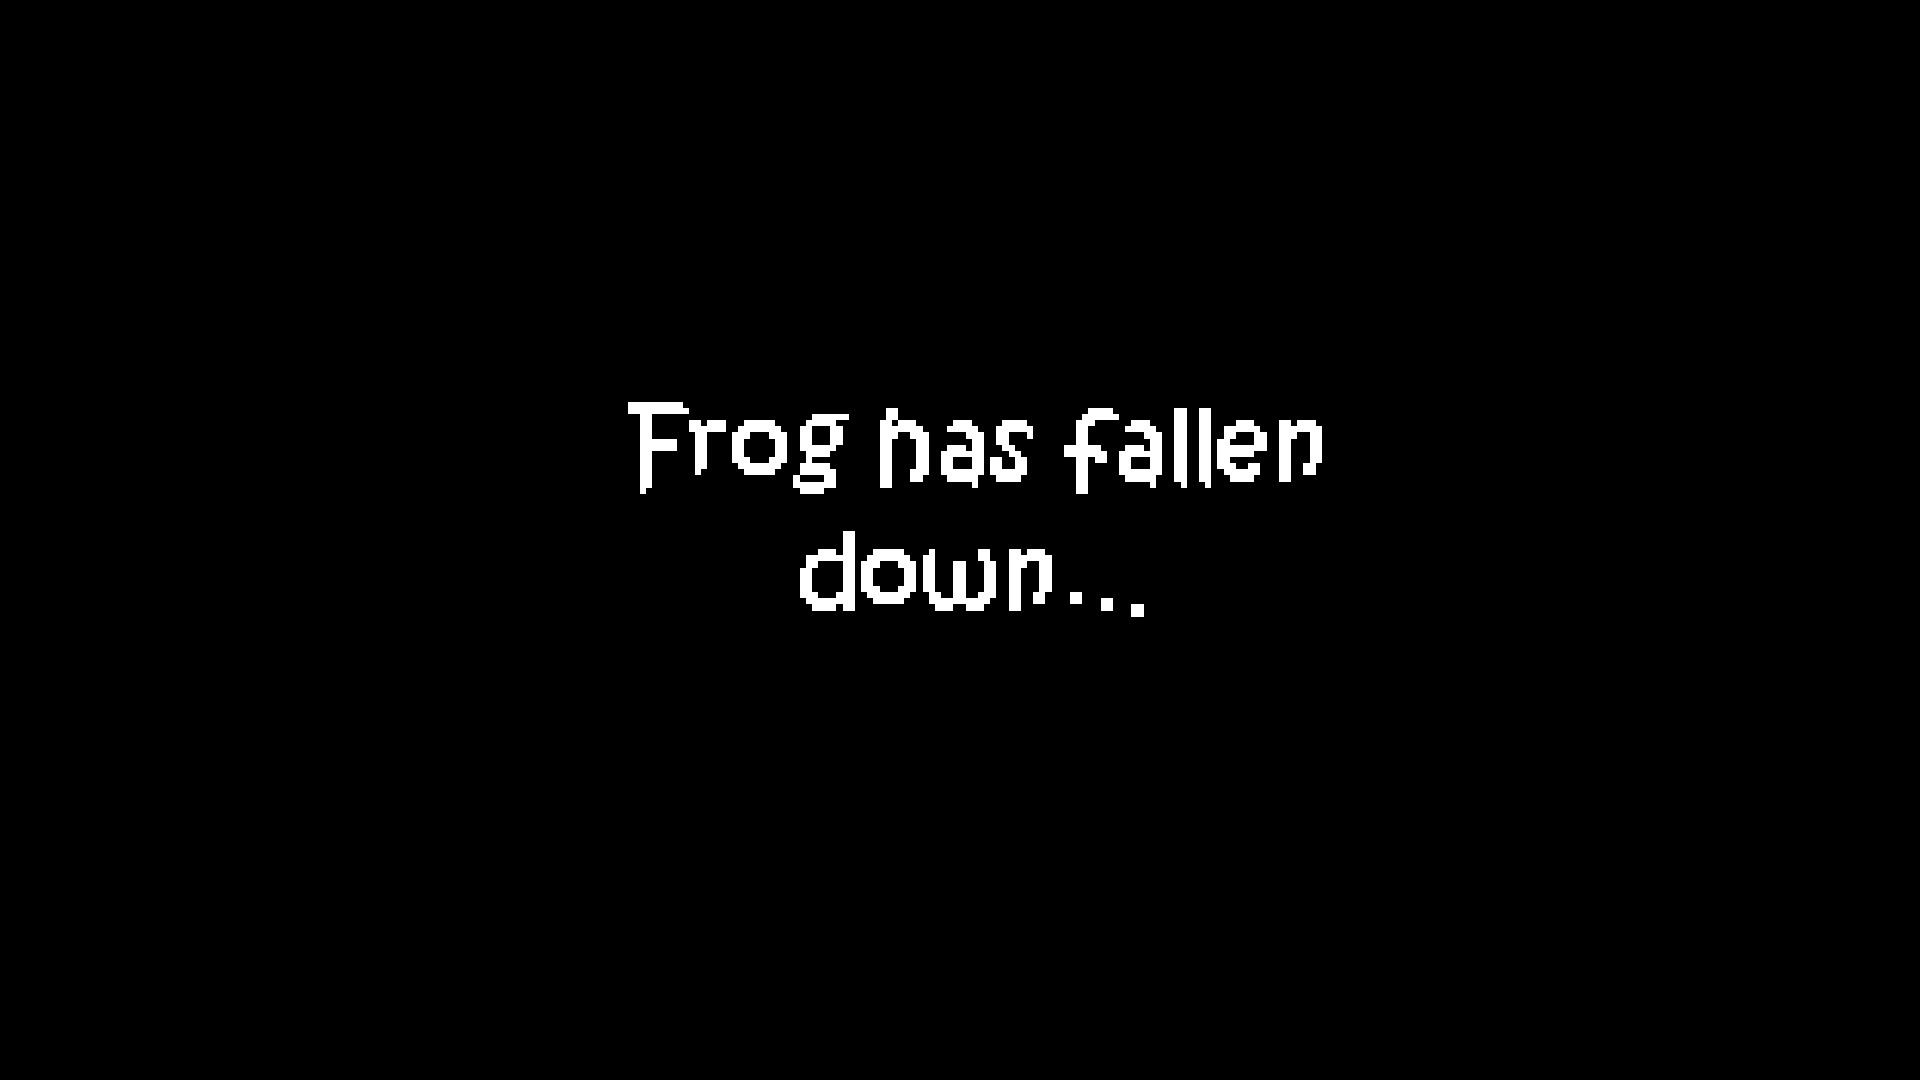 Frog Fall Down Steam CD Key, $0.25